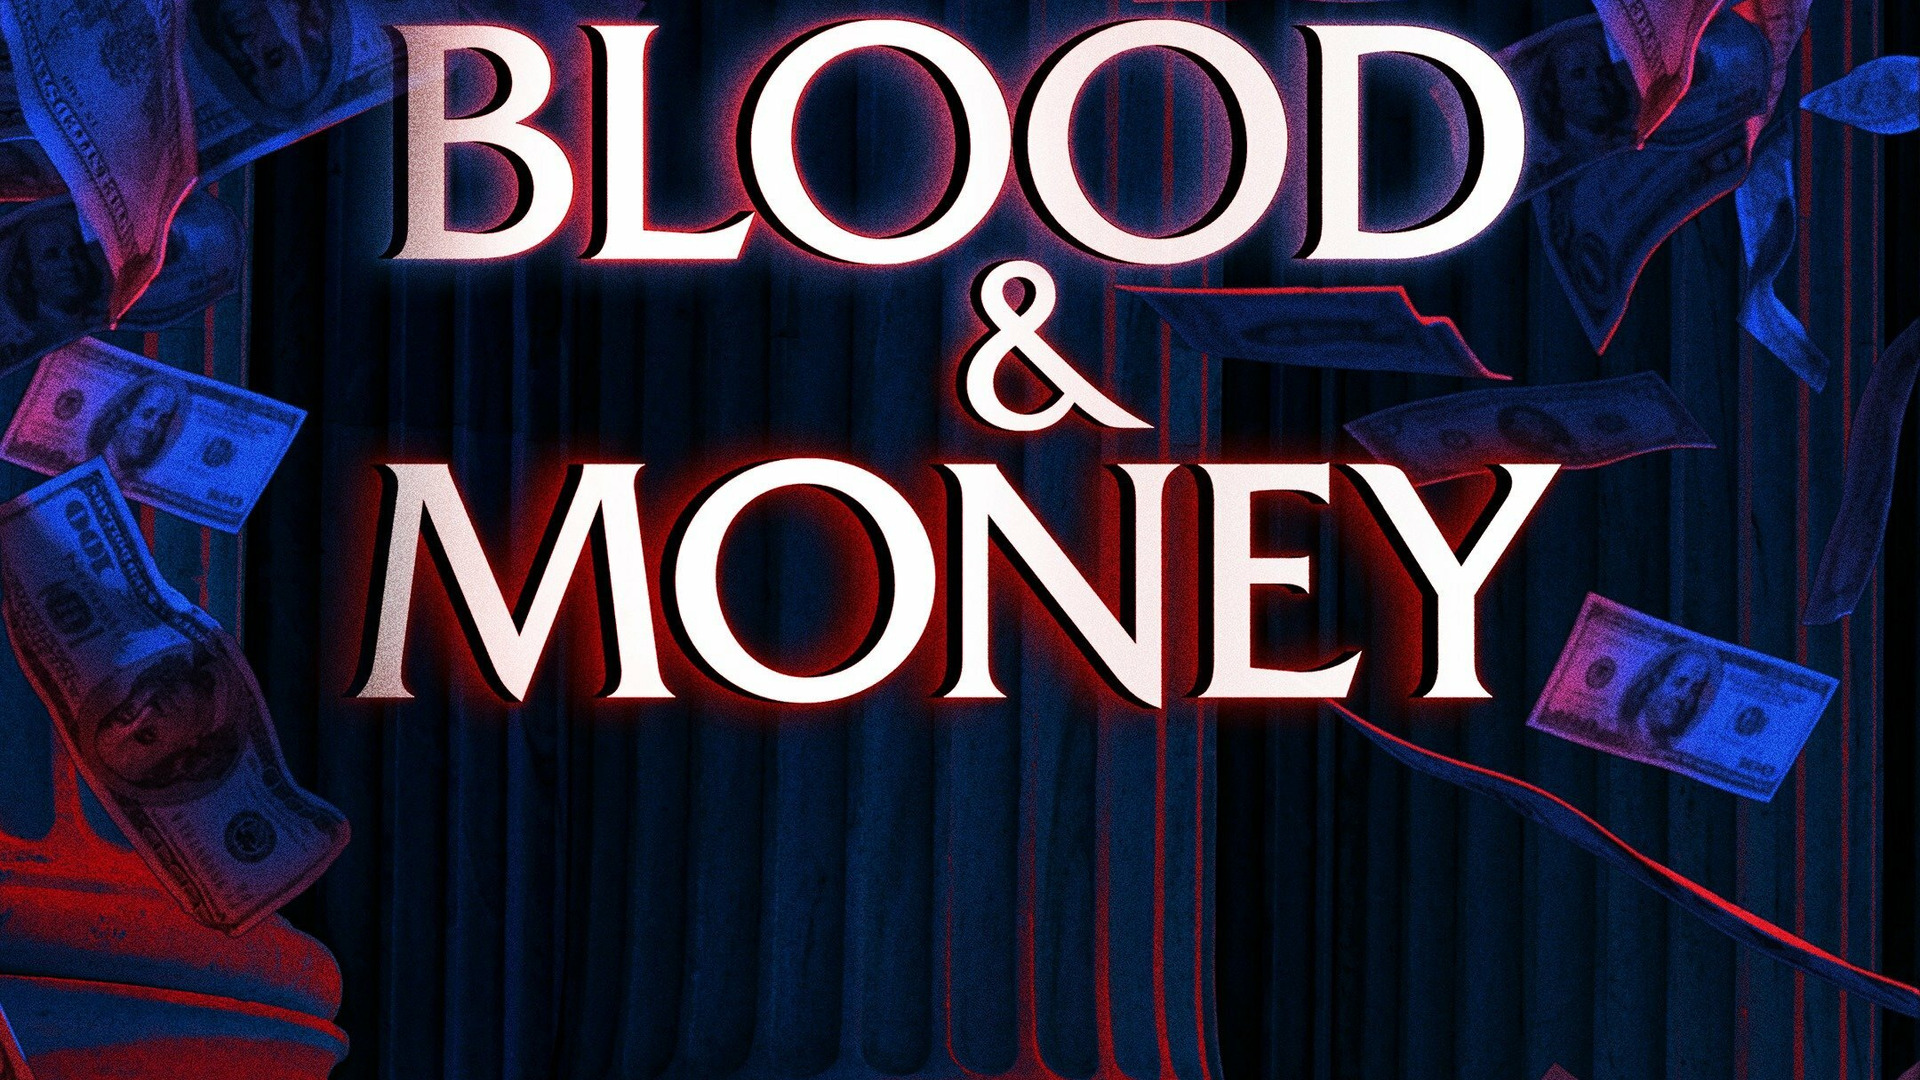 Show Blood & Money